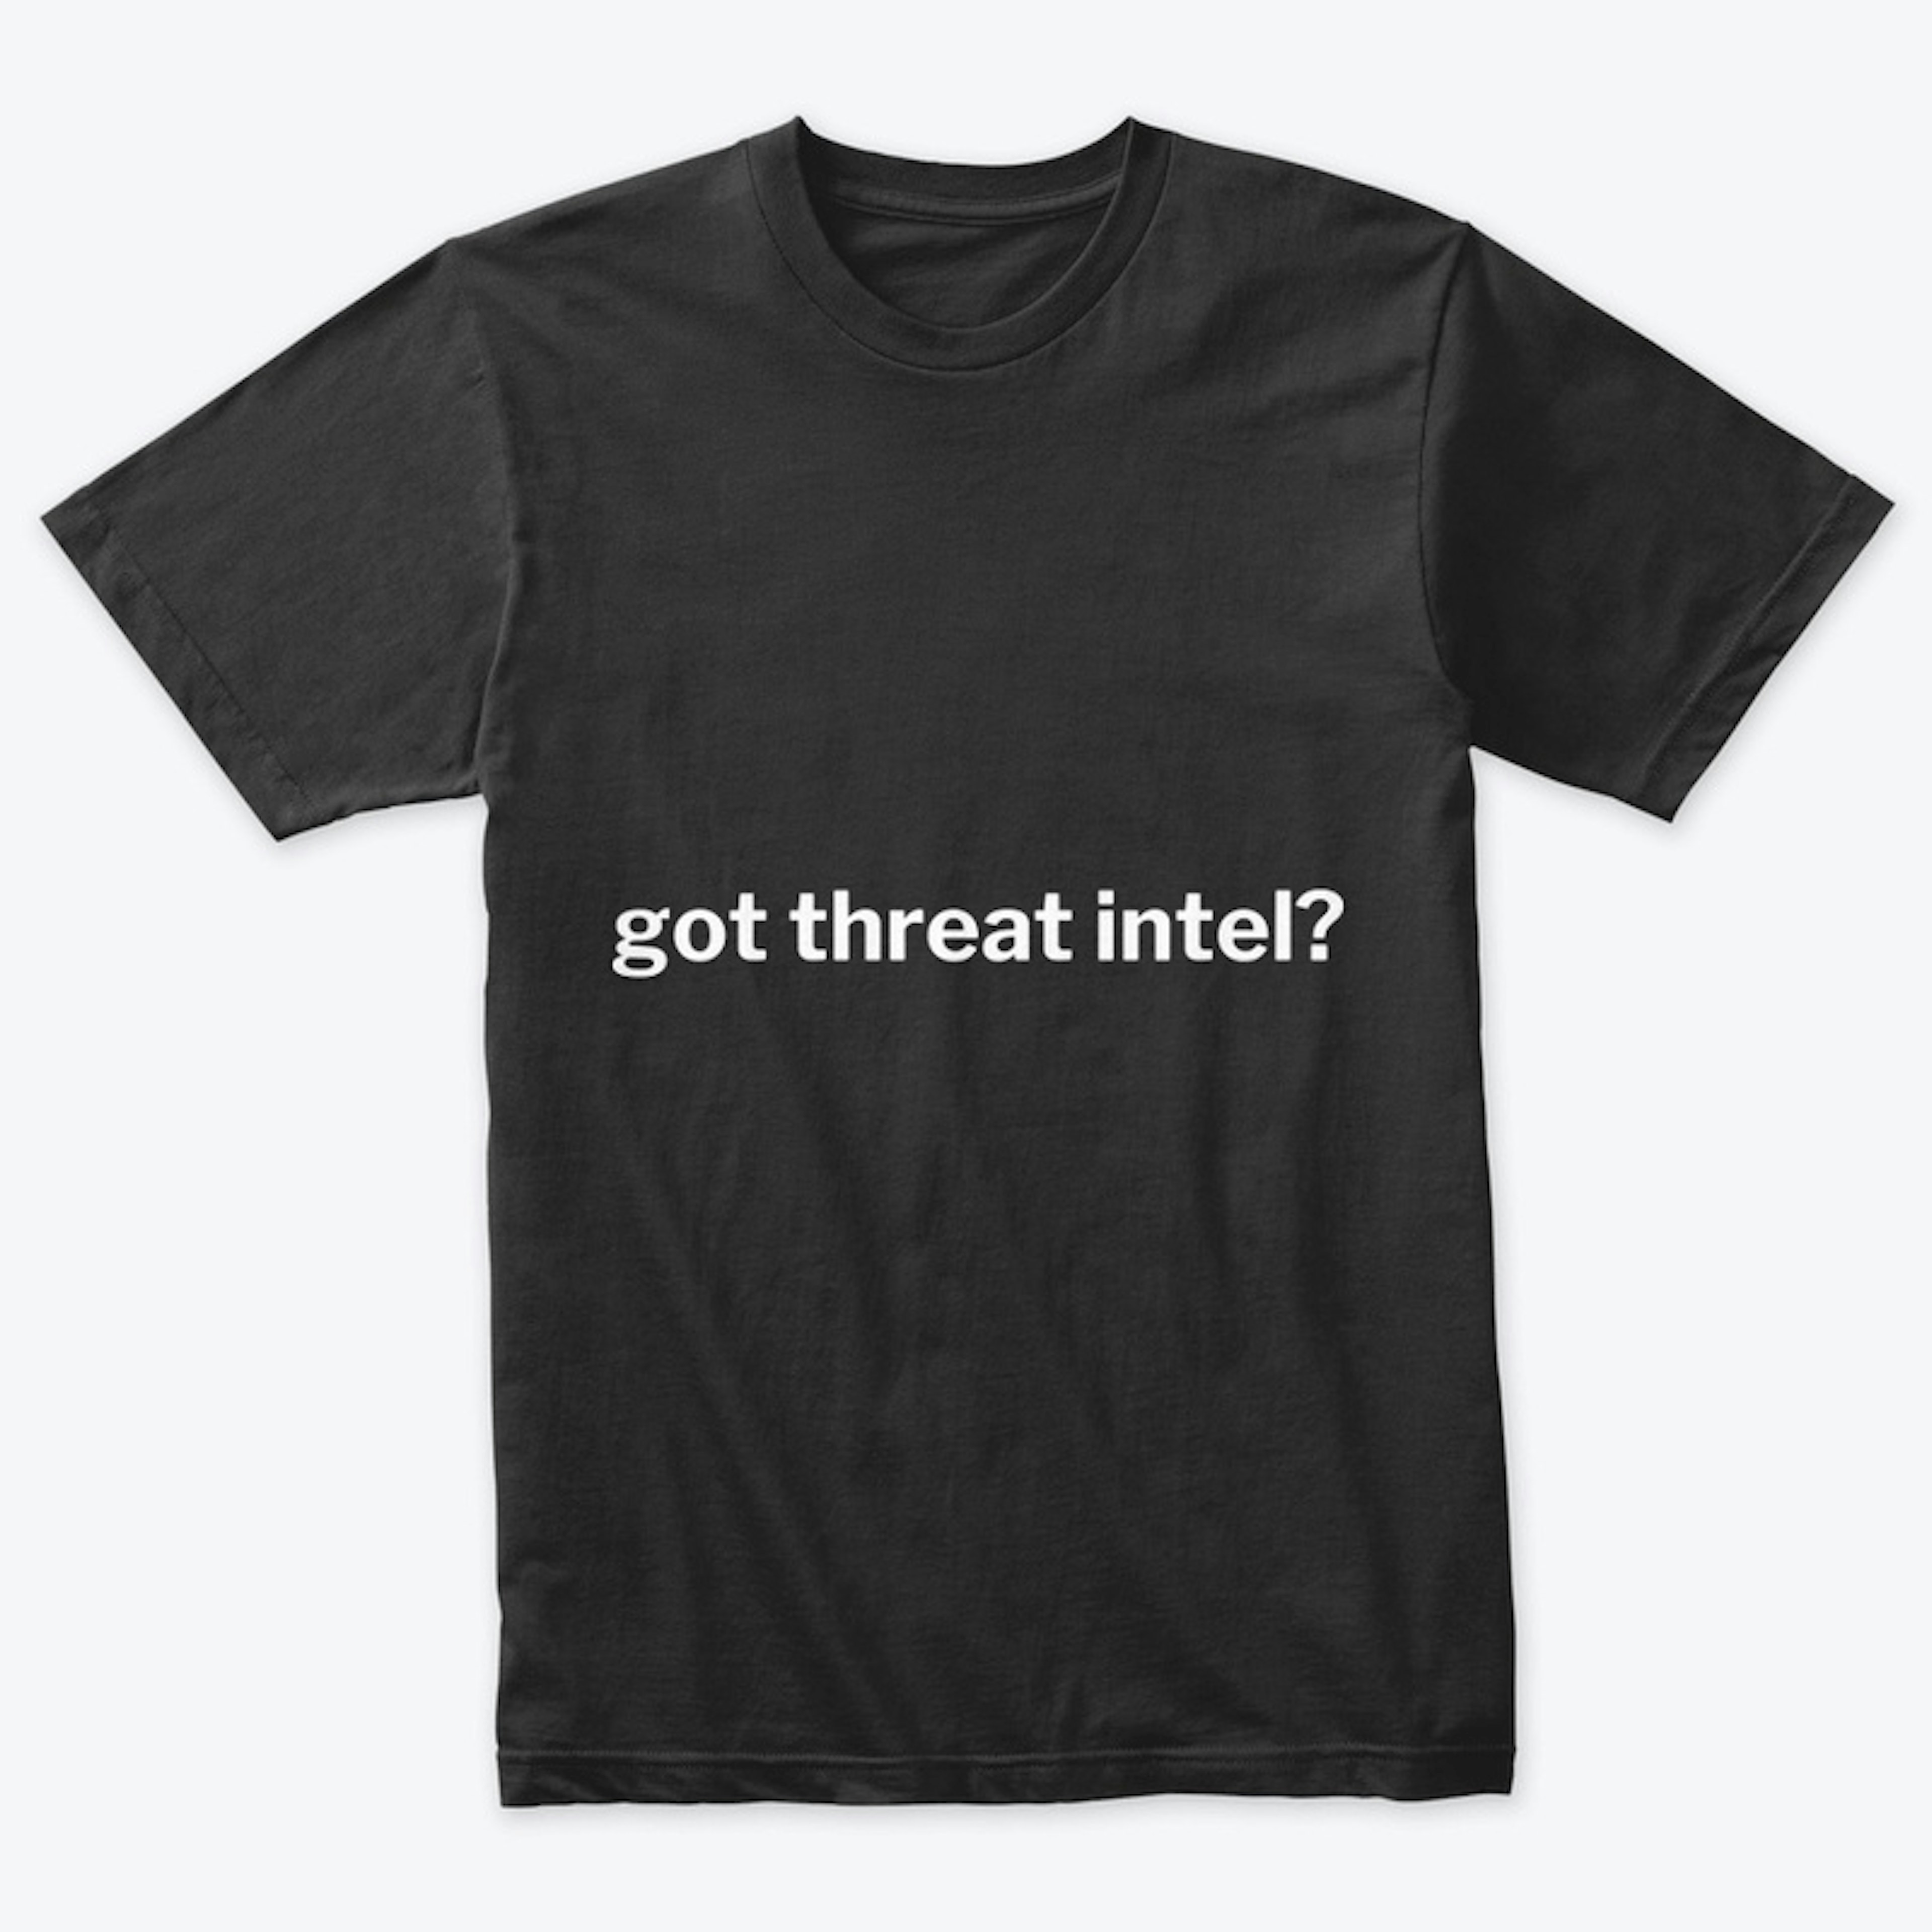 got threat intel?